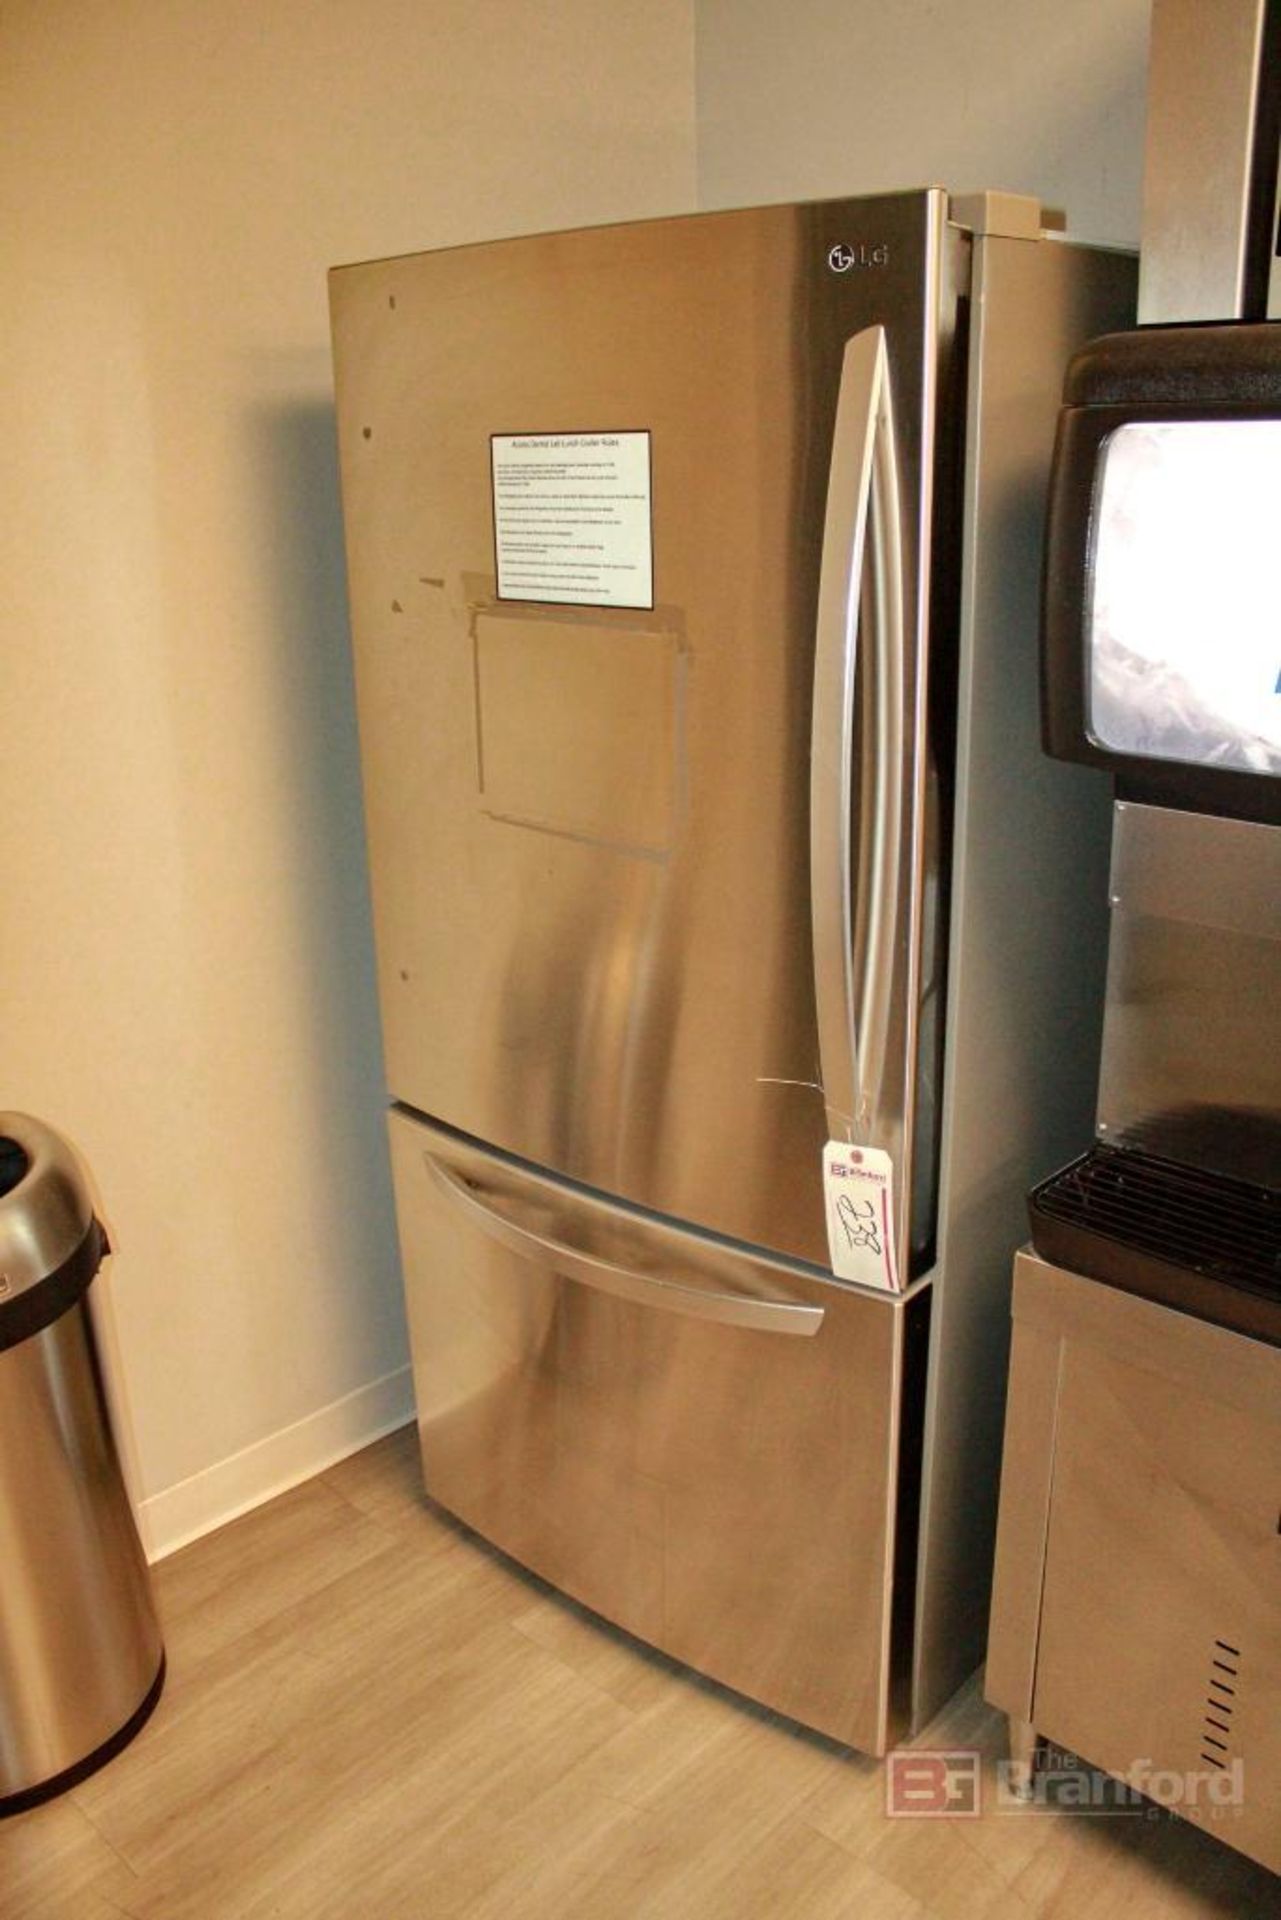 LG Refrigerator Model LDCS24223S